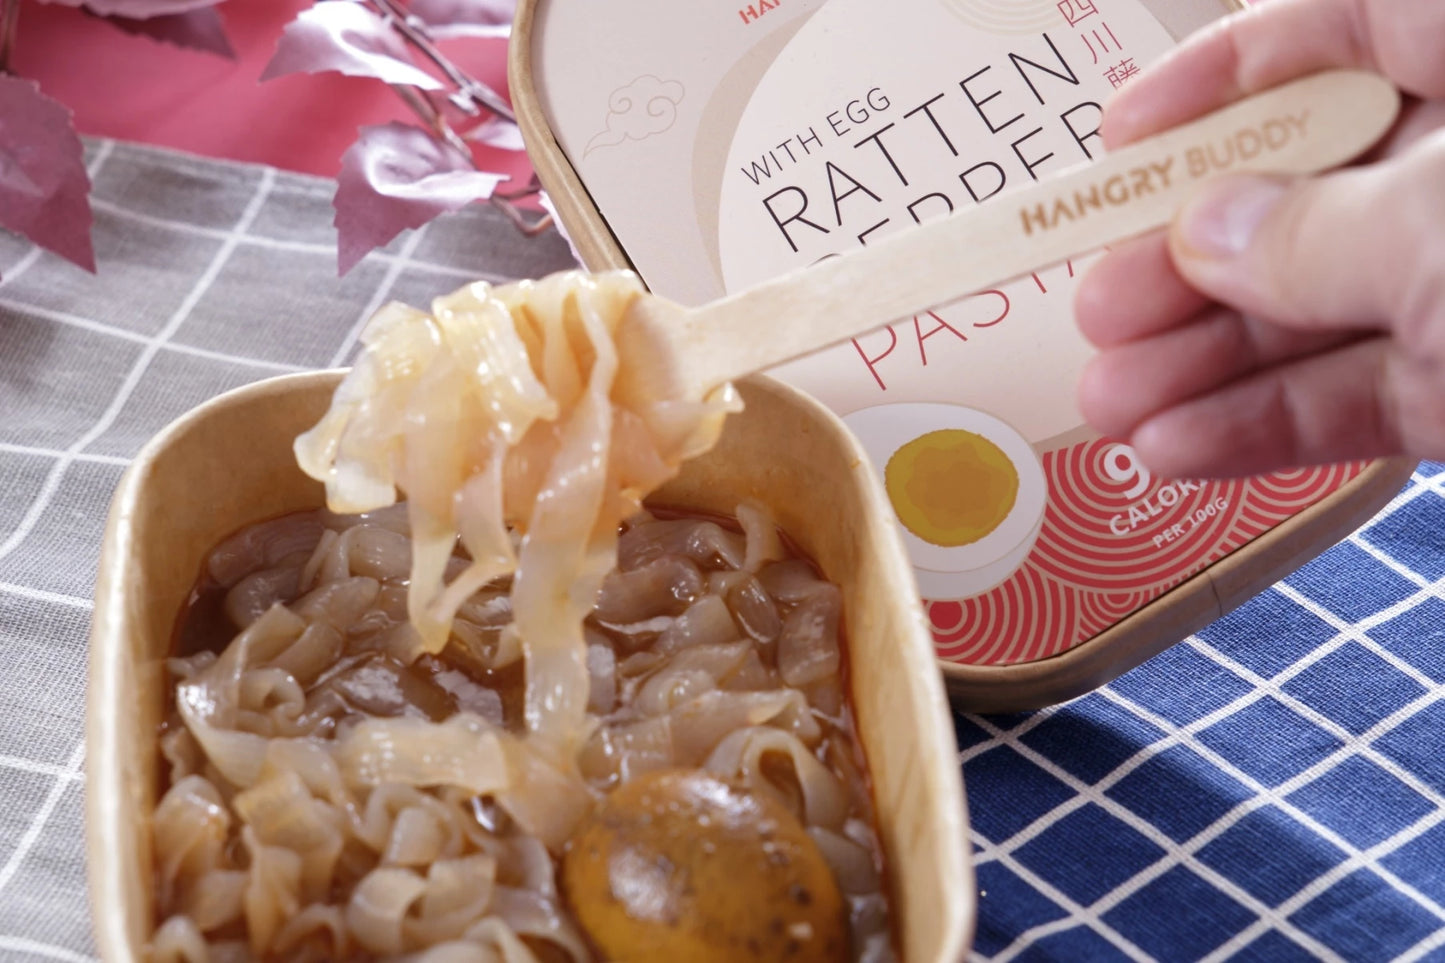 Ratten Pepper Pasta with Egg 四川藤椒滷蛋蒟蒻寬粉